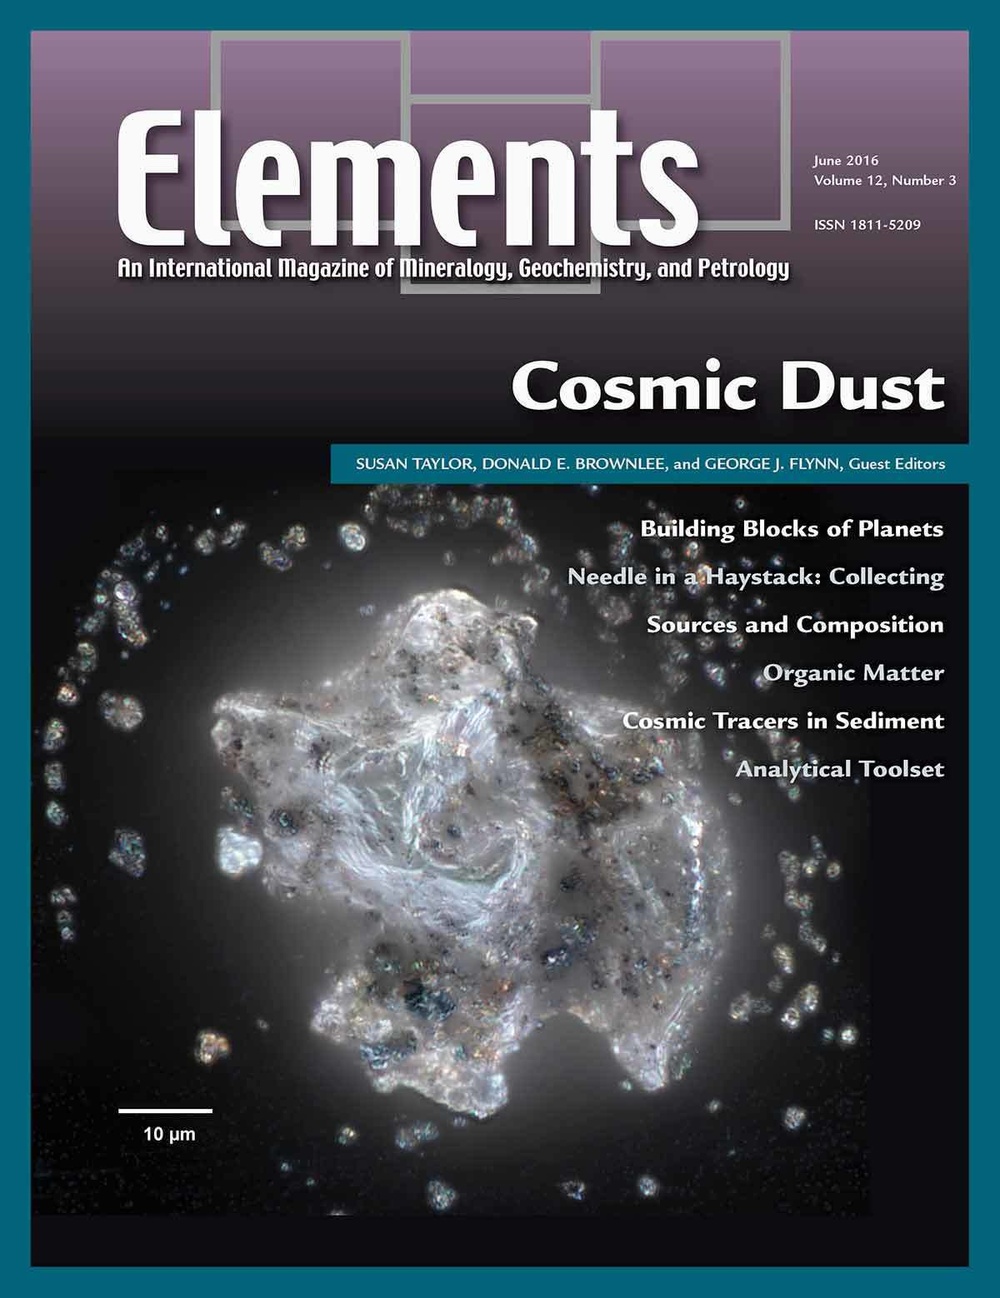 USACE scientist edits 'Elements' magazine